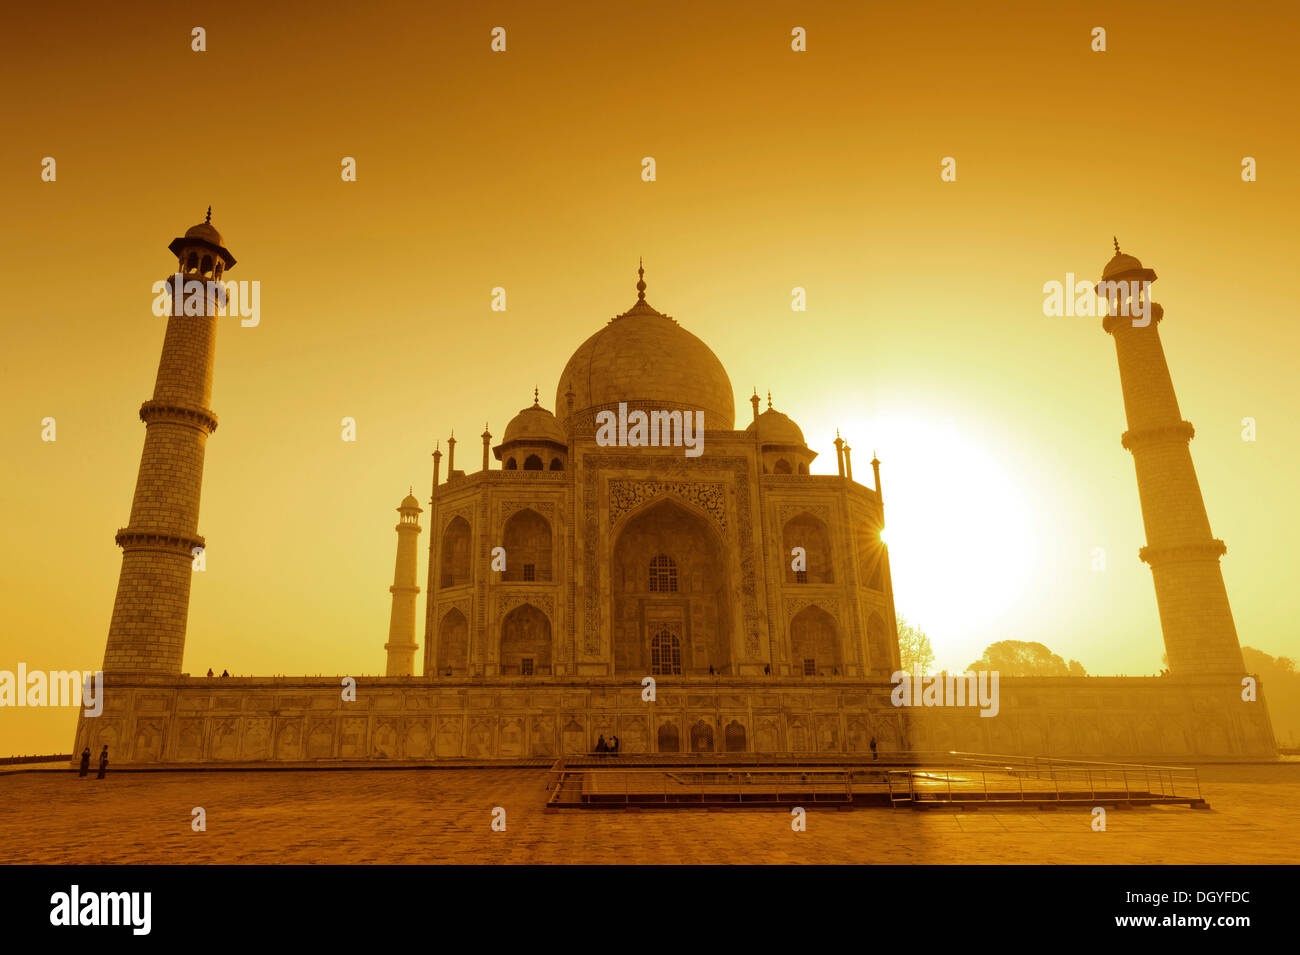 Taj Mahal, mausoleum, UNESCO World Heritage Site, at sunrise, Agra, Uttar Pradesh, India Stock Photo